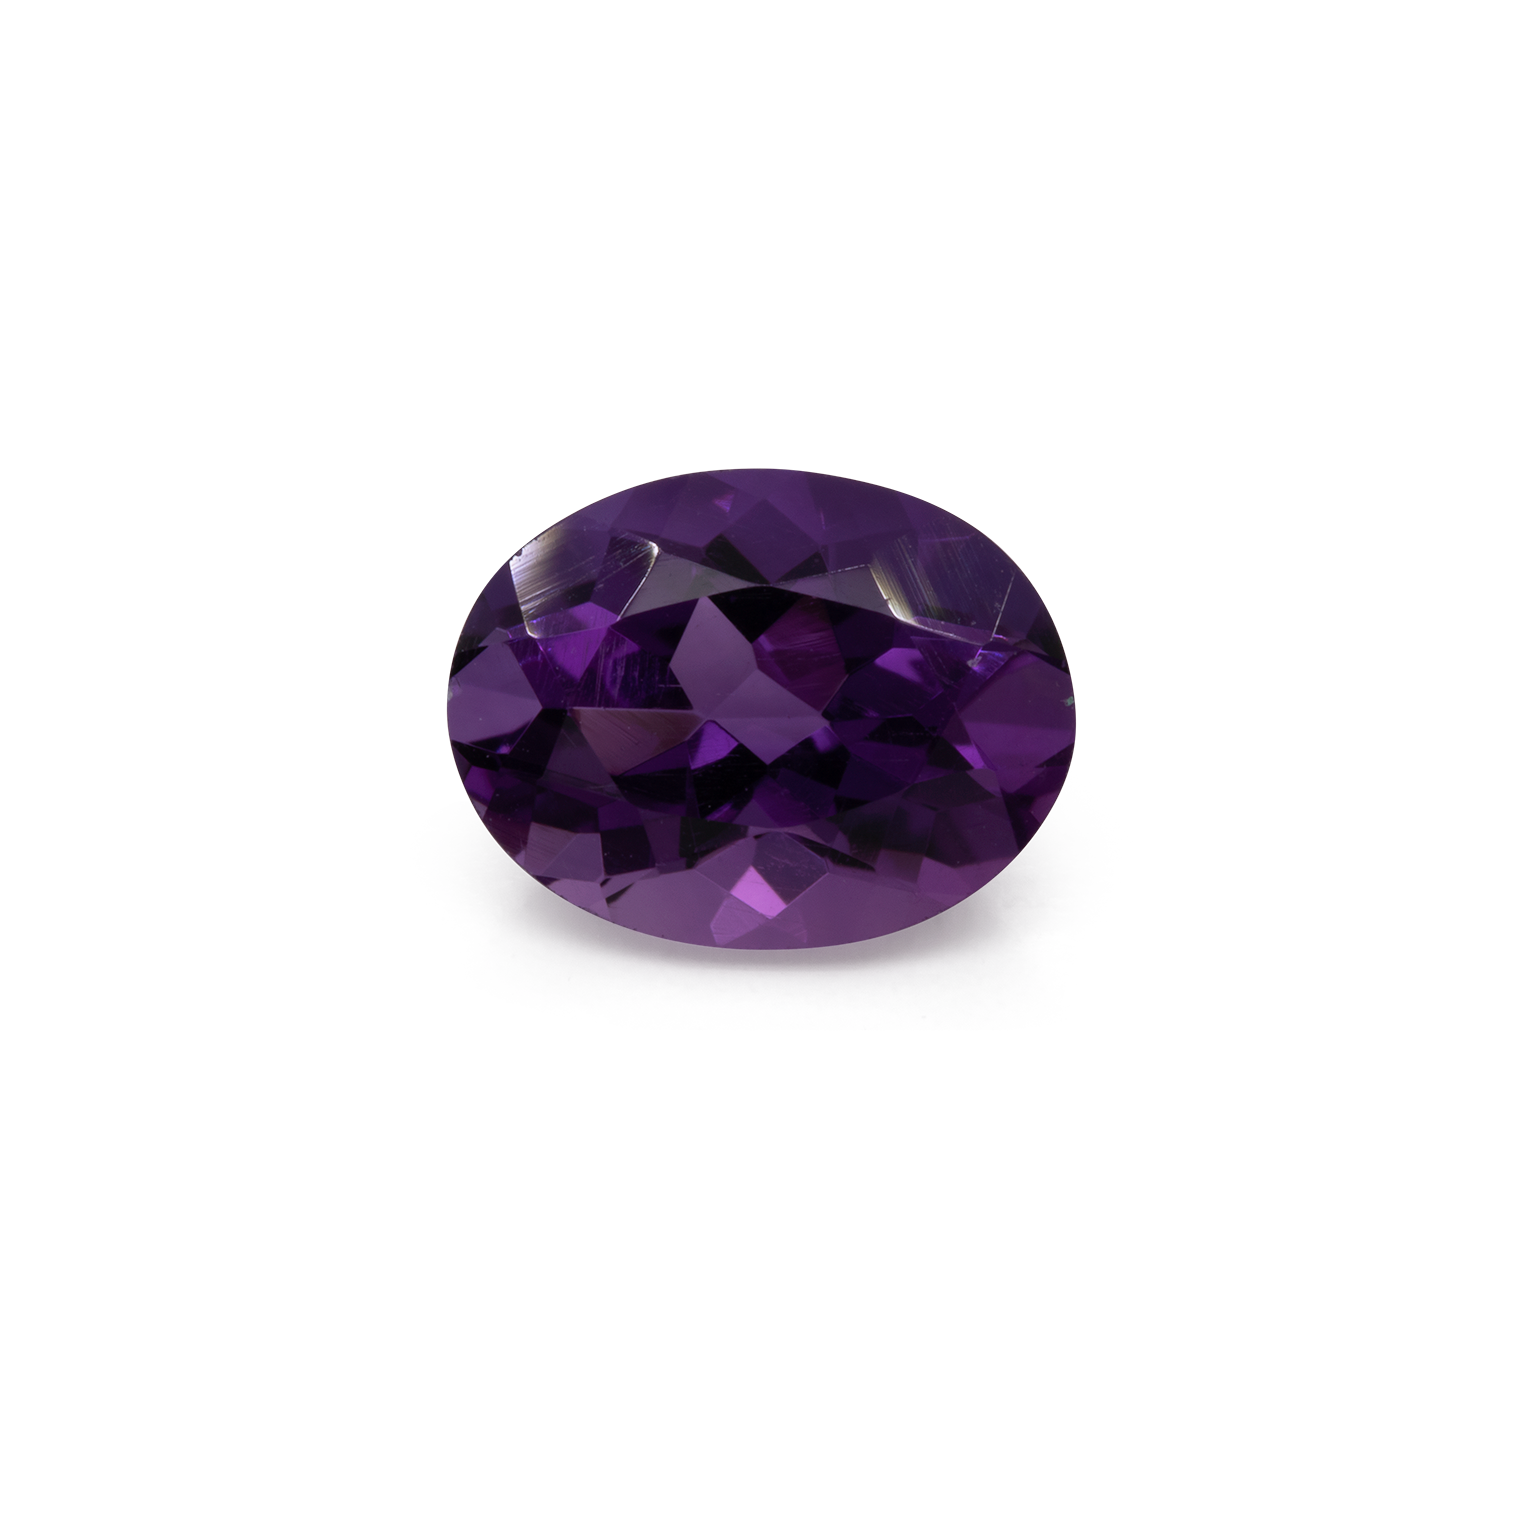 Amethyst - dark purple, oval, 9x7 mm, 1.45-1.65 cts, No. AMY49001